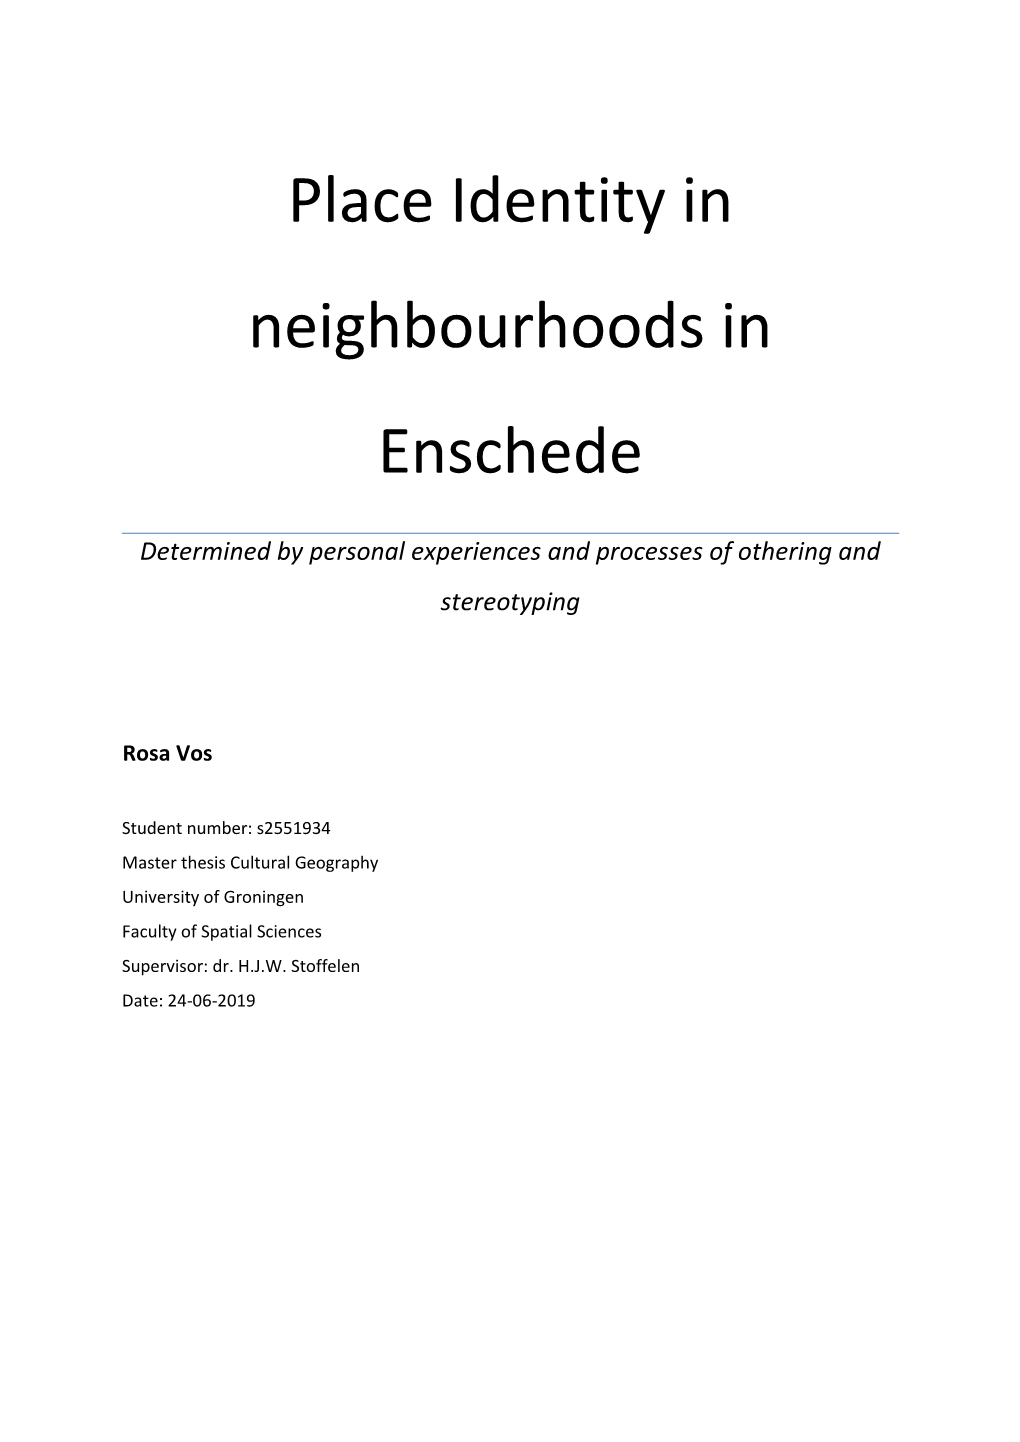 Place Identity in Neighbourhoods in Enschede